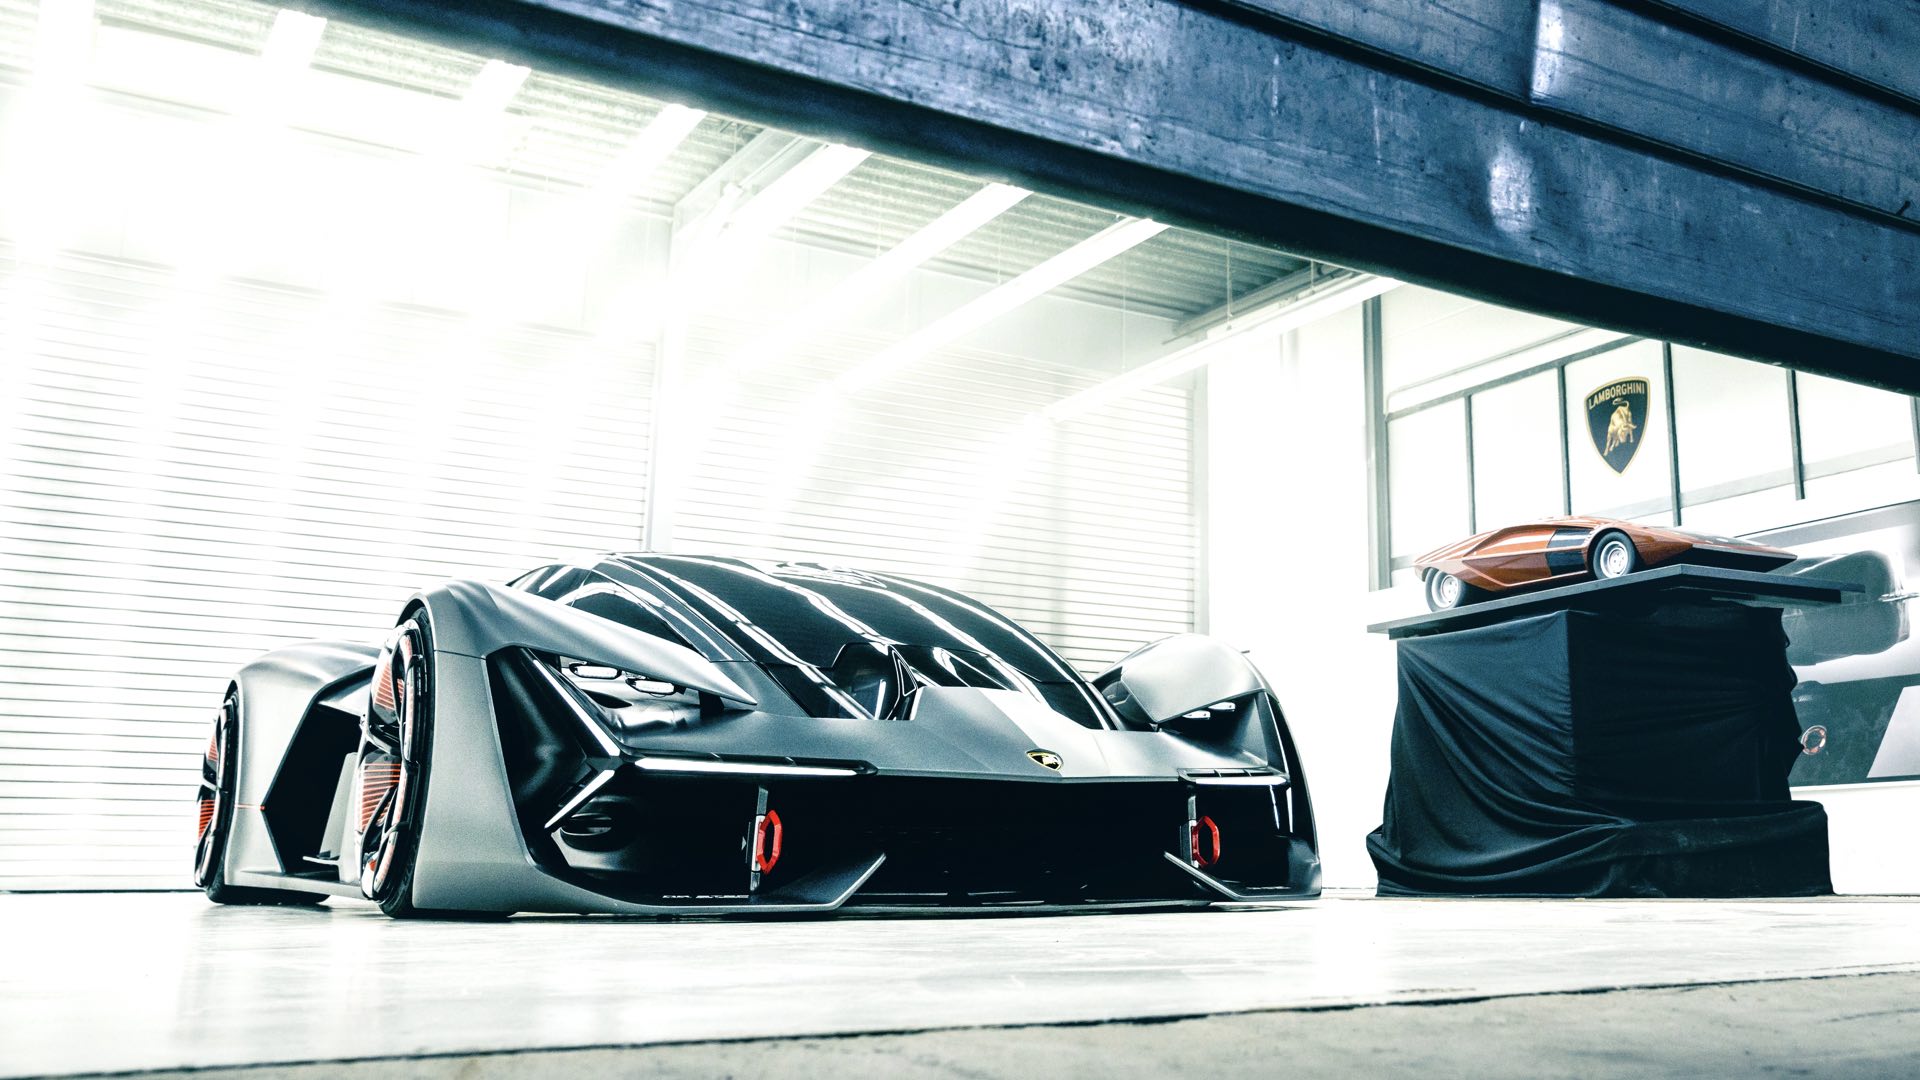 Lamborghini Trono is a Futuristic All-Electric Hypercar with a